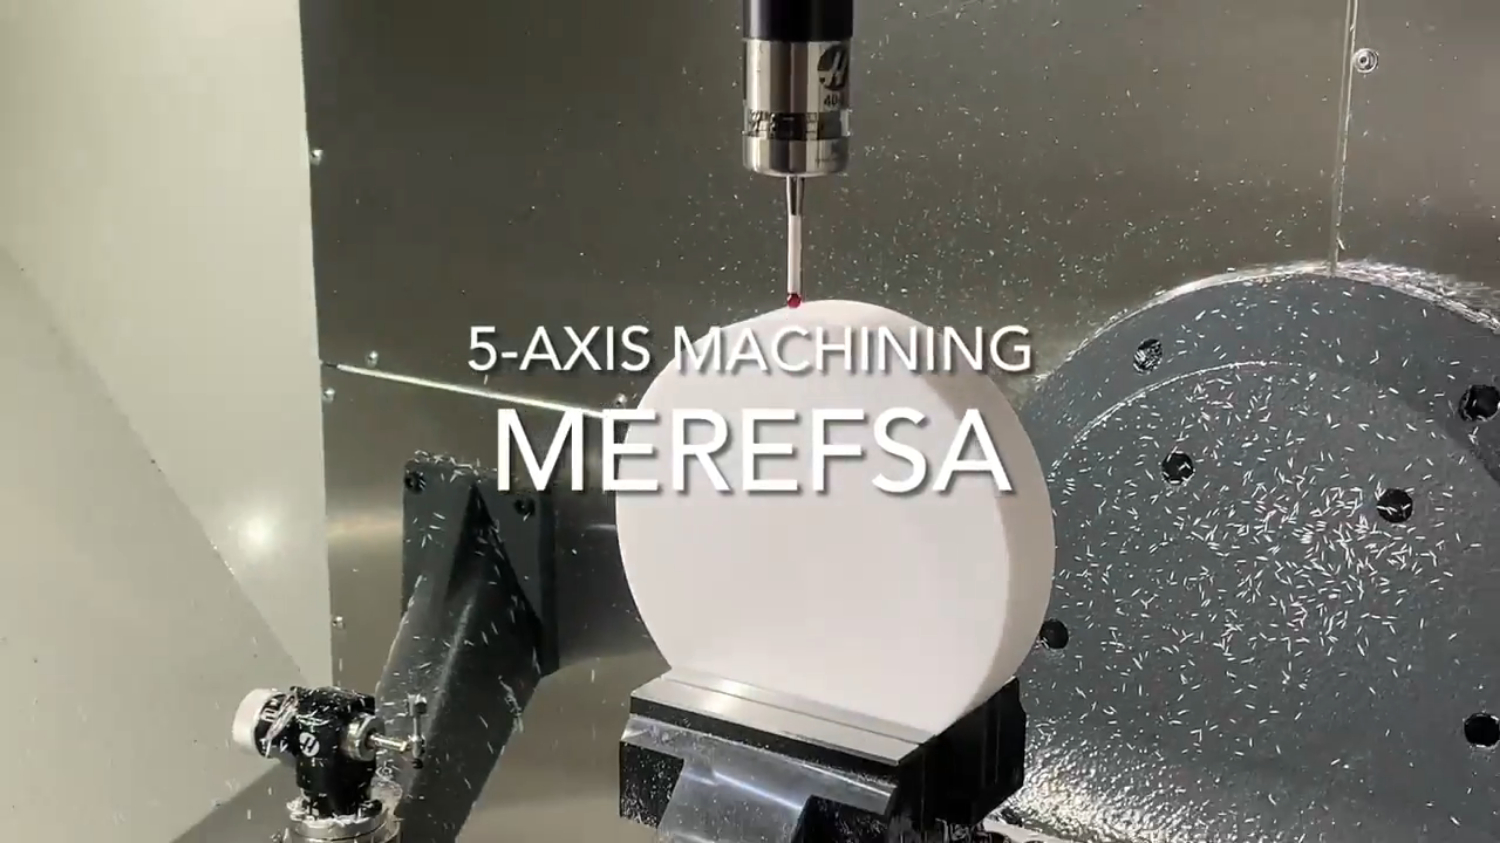 Machining process in MEREFSA: 5-Axis Simultaneus machining